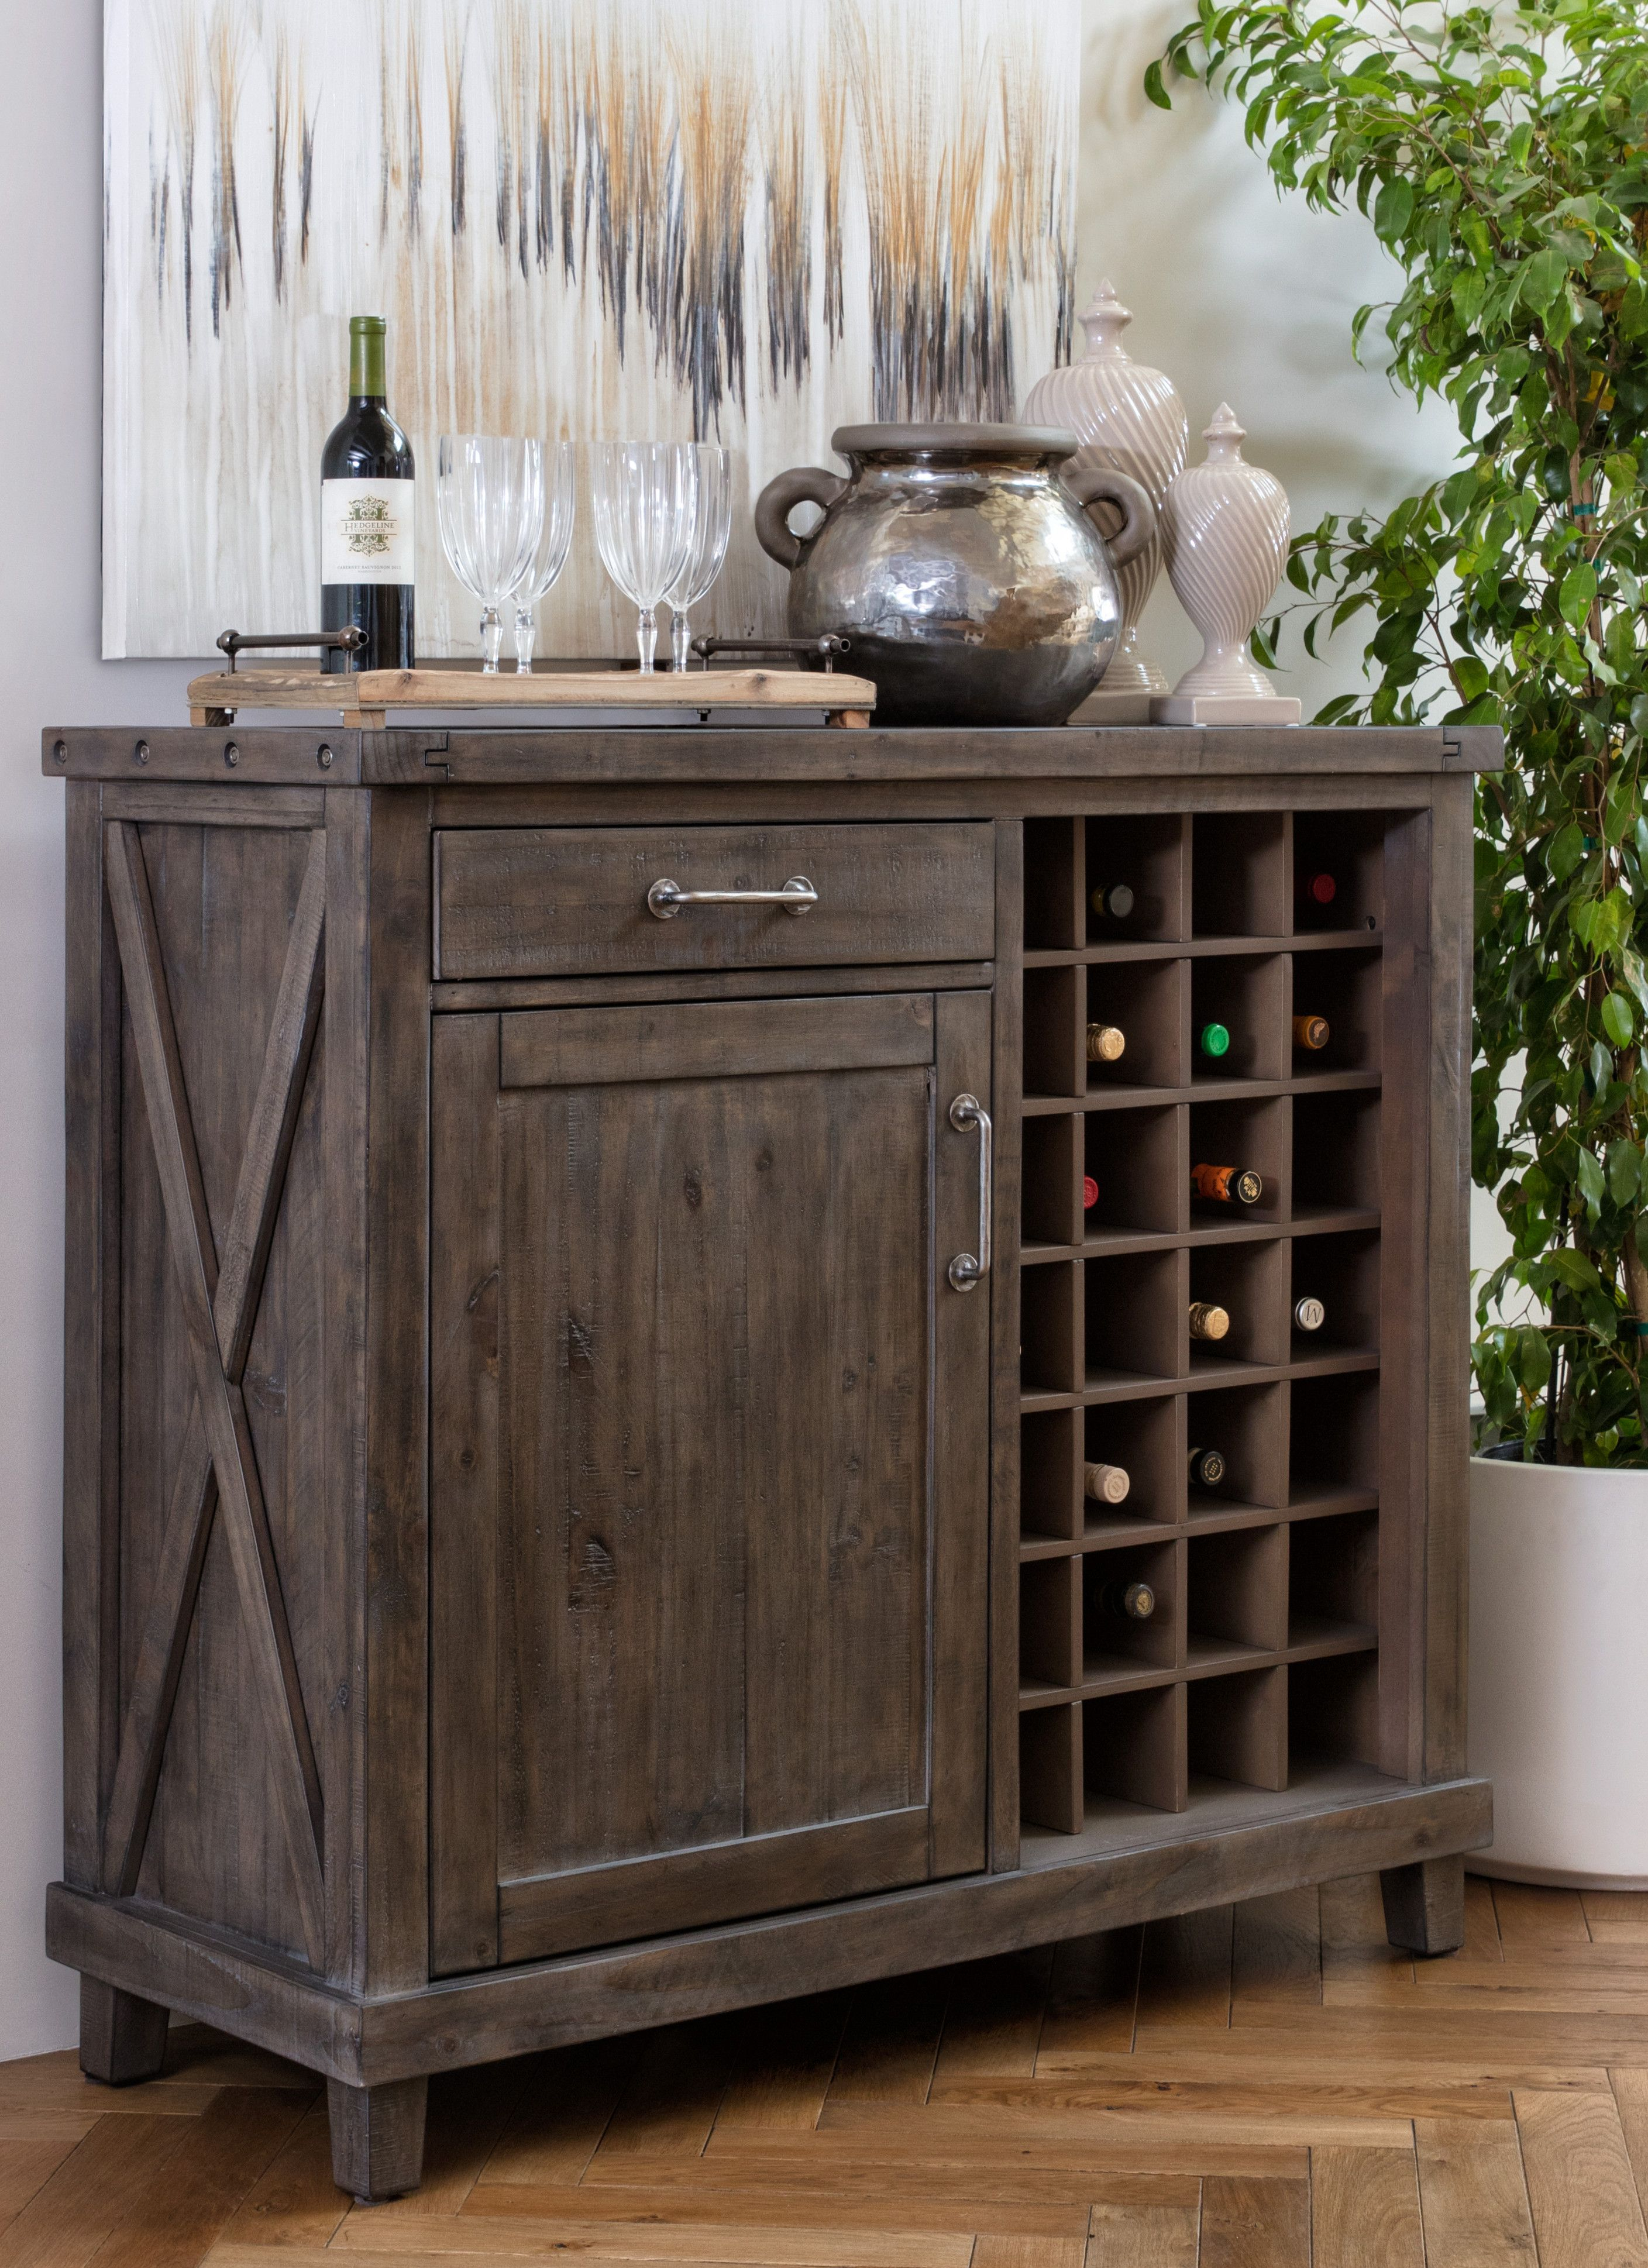 Jaxon Grey Wine Cabinet Rustic Modern Designs In 2019 within size 2817 X 3877